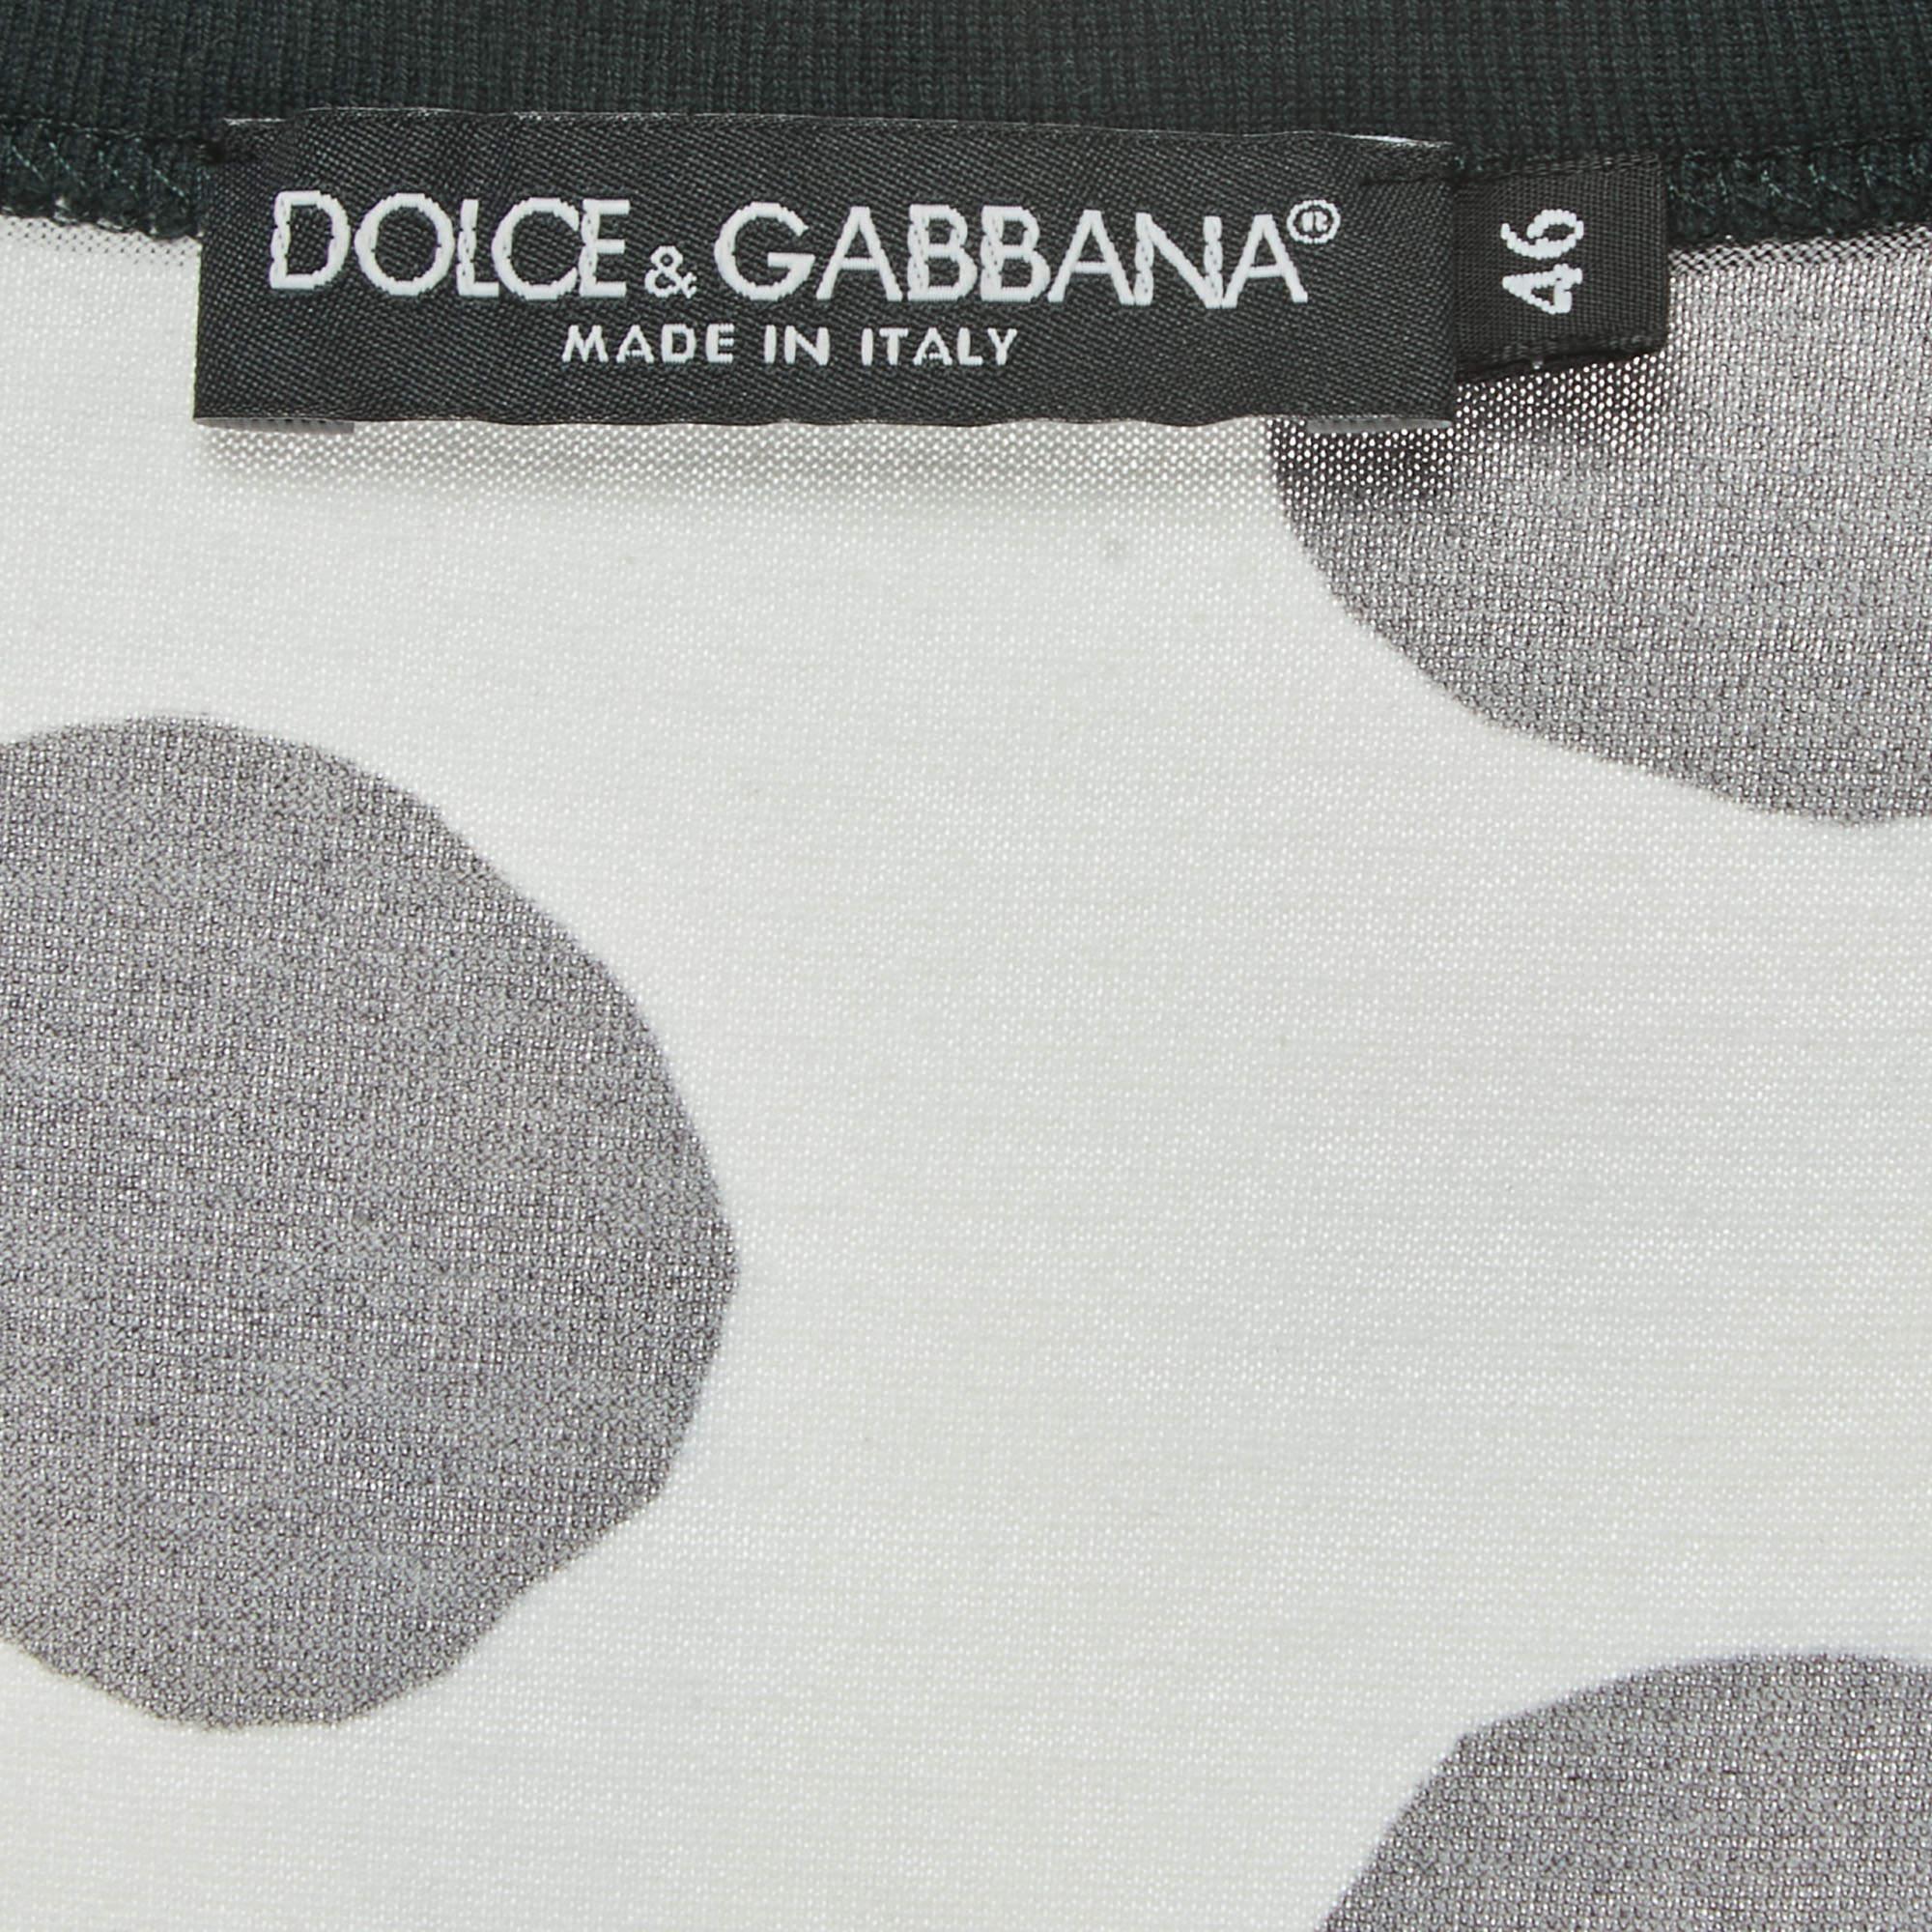 Dolce & Gabbana Multicolor All-Over Print Cotton V-Neck Half Sleeve T-Shirt S For Sale 1